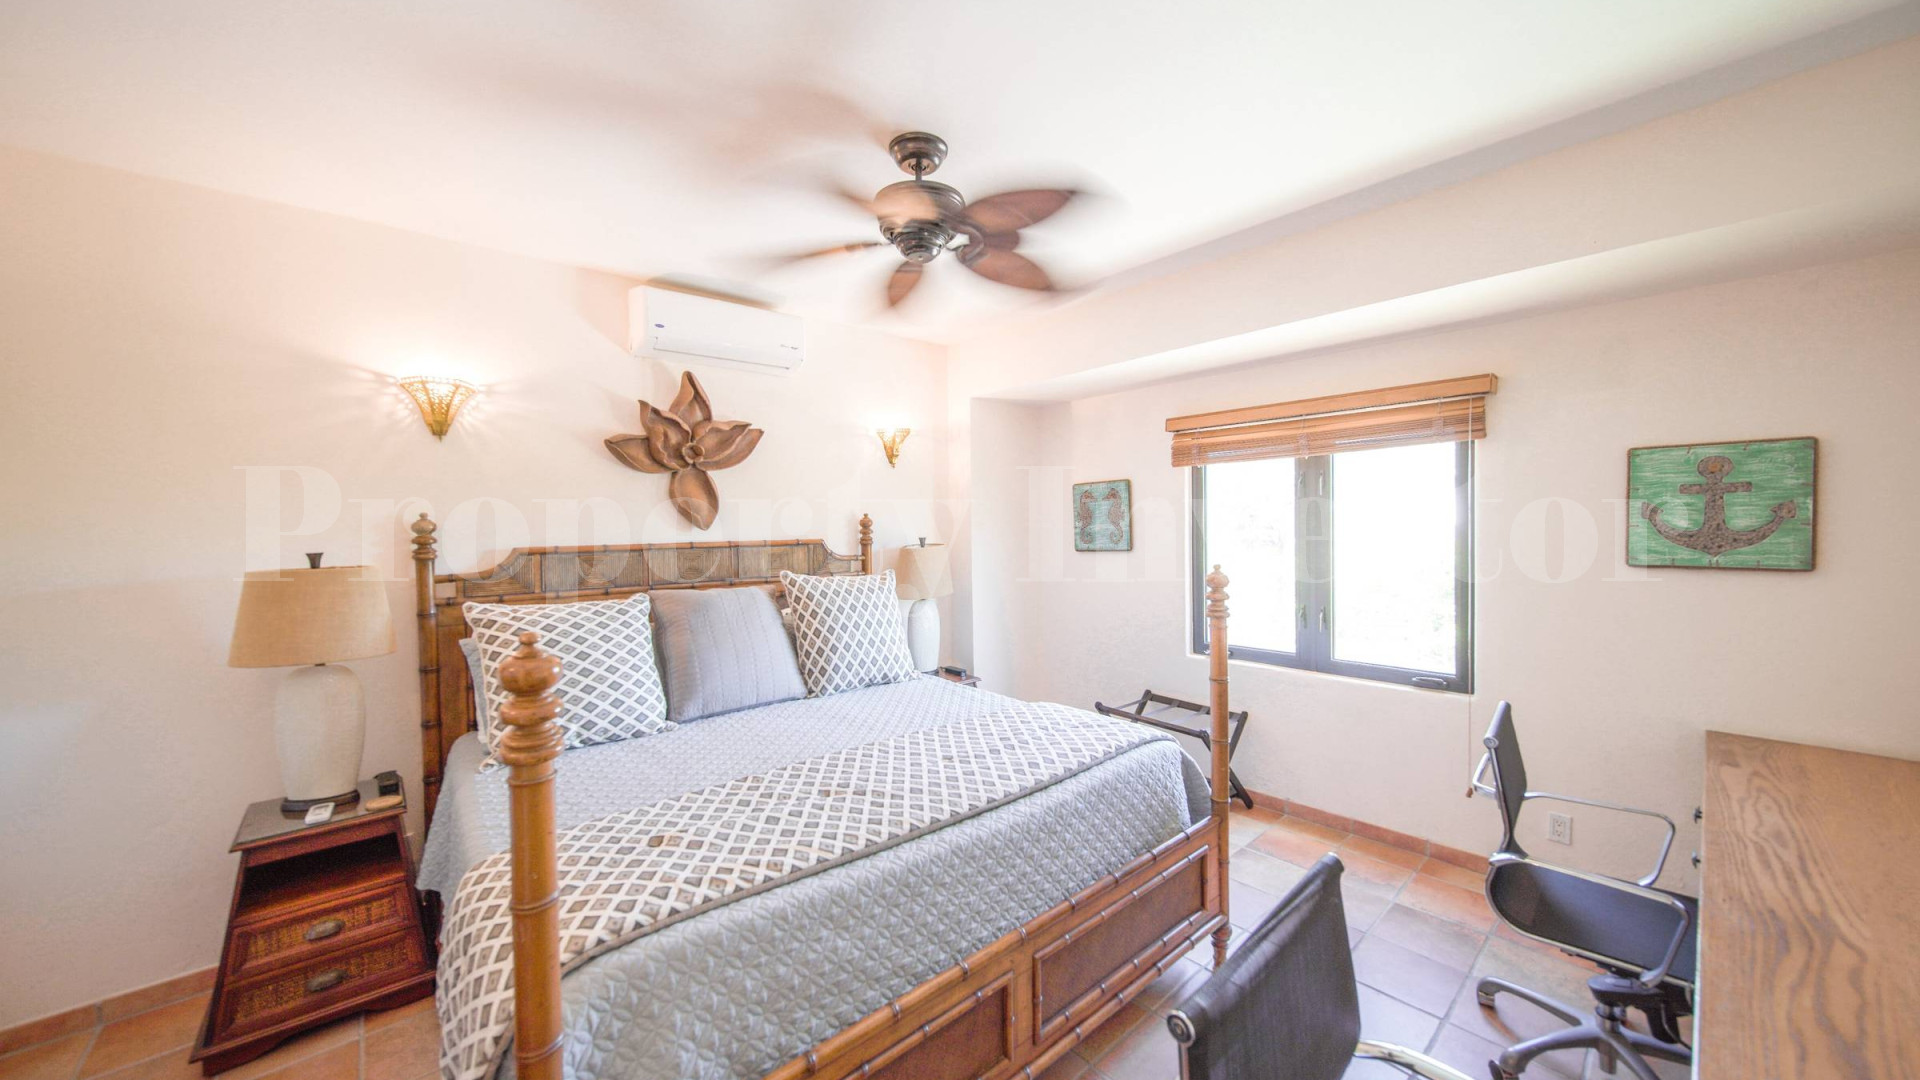 Exceptional 7 Bedroom Luxury Moroccan Style Beachfront Villa for Sale on Sapodilla Bay Beach, Turks & Caicos